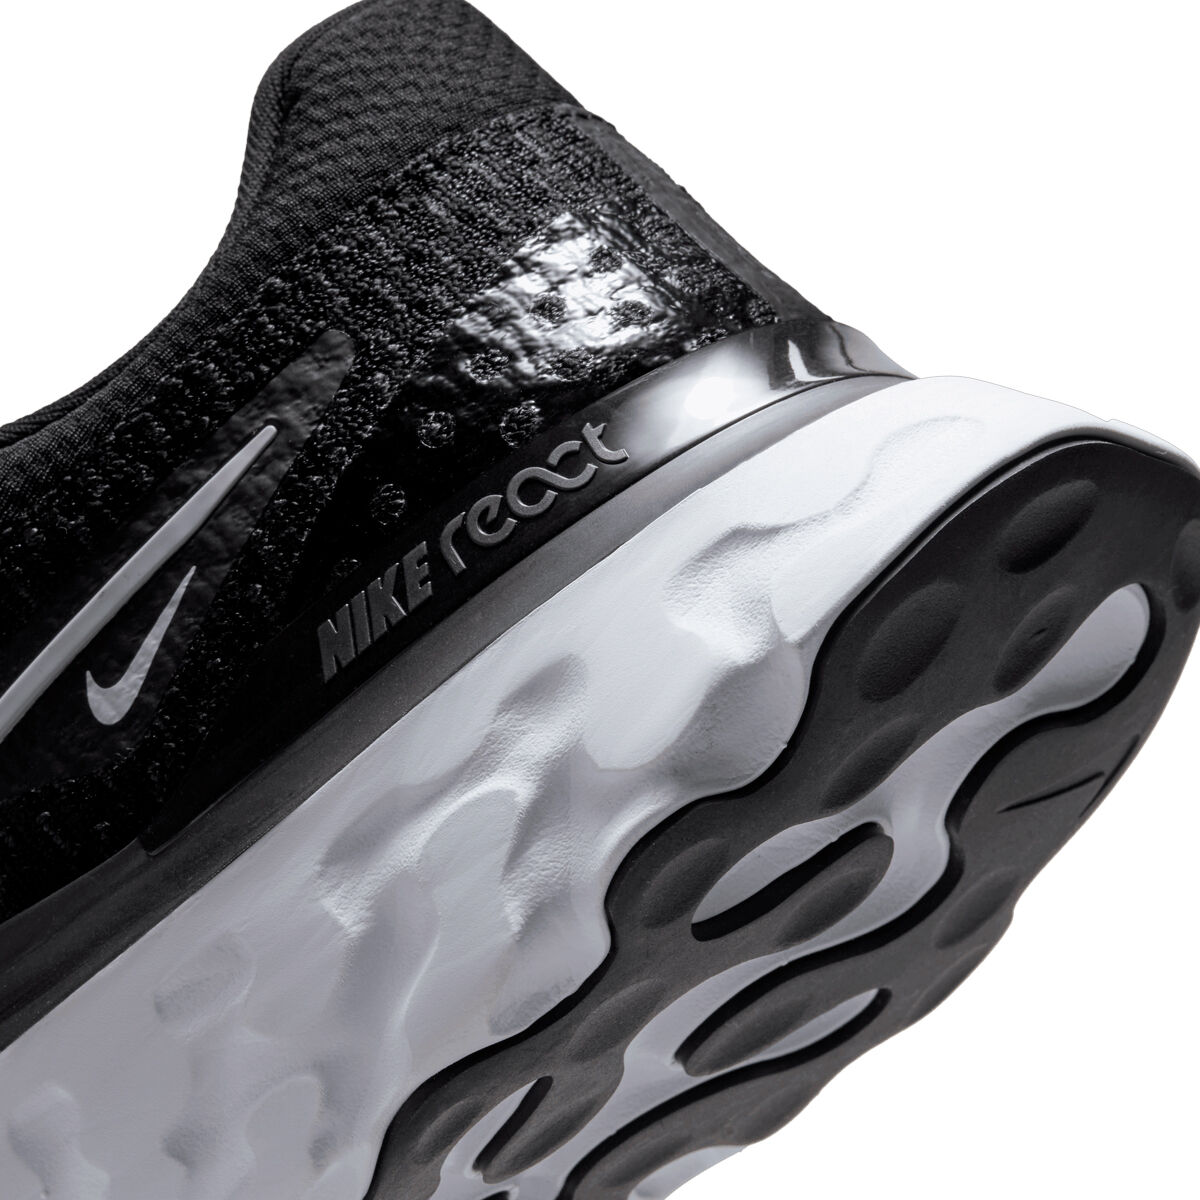 Nike React Infinity Run Flyknit 3 Mens Running Shoes Black/White US 8 ...